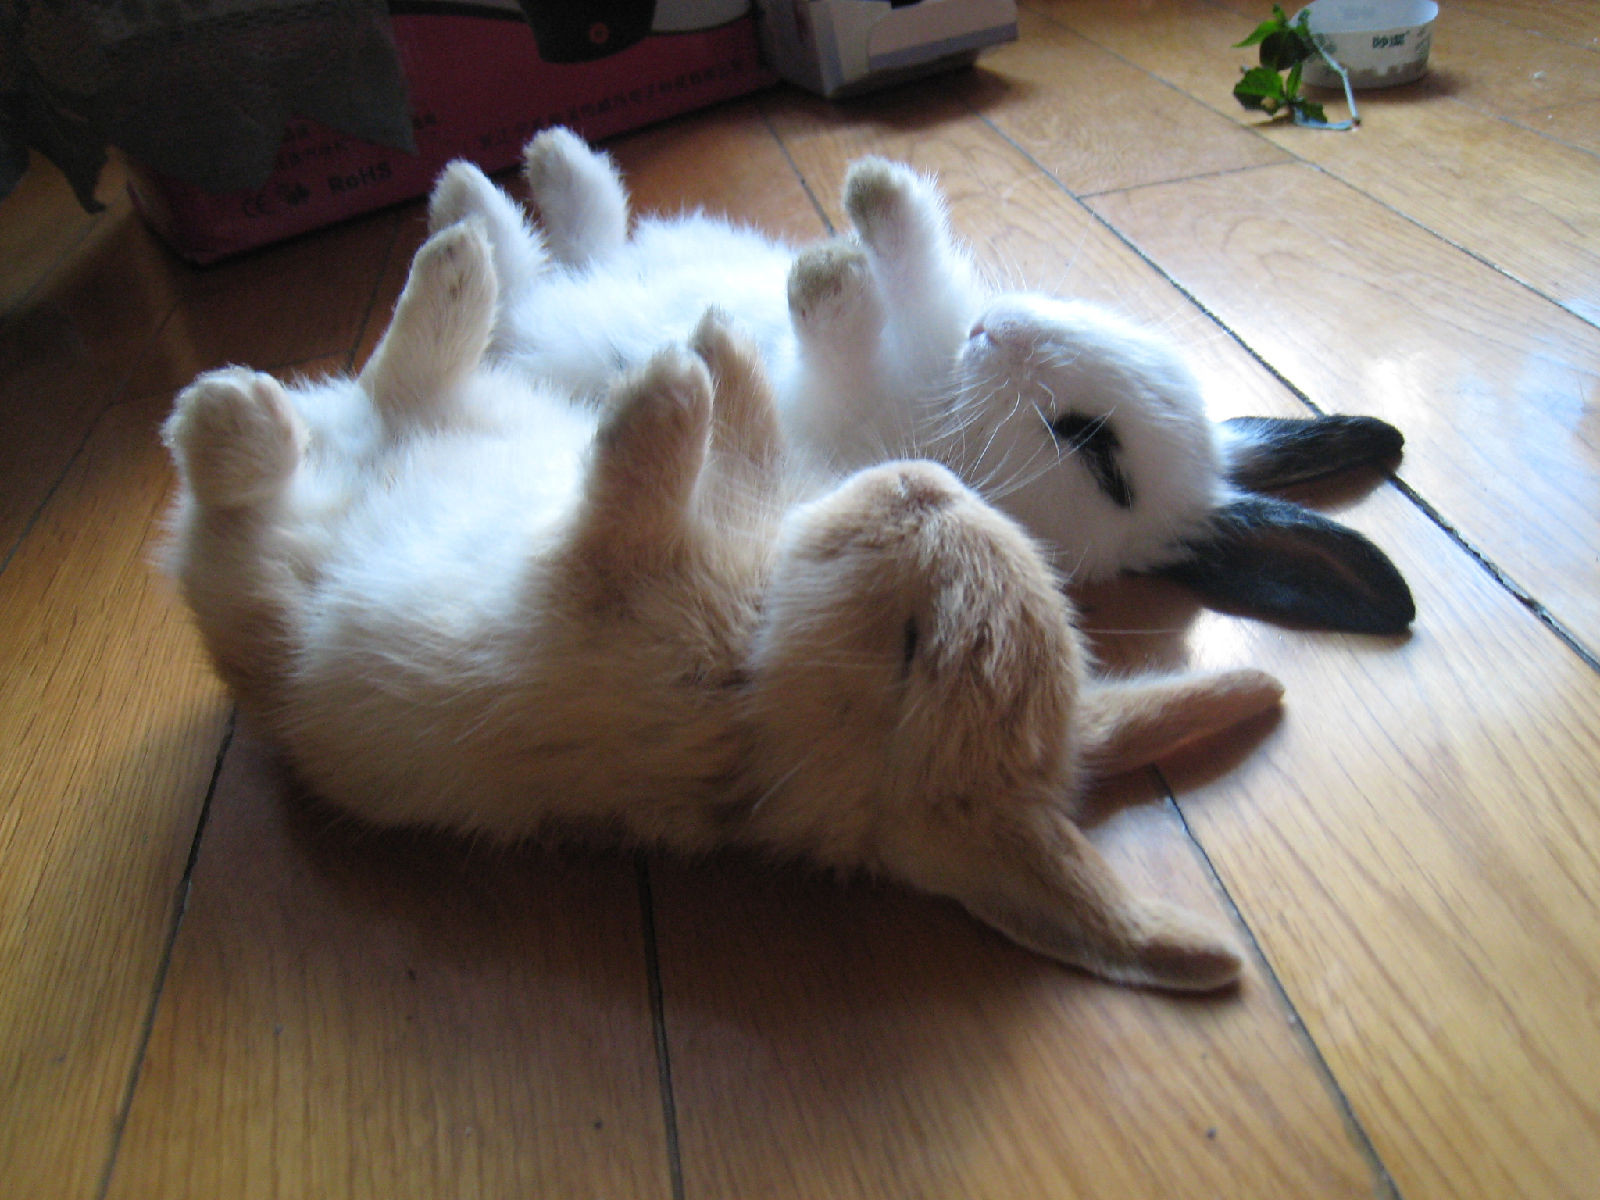 Funny Cute Rabbits Sleeping Image